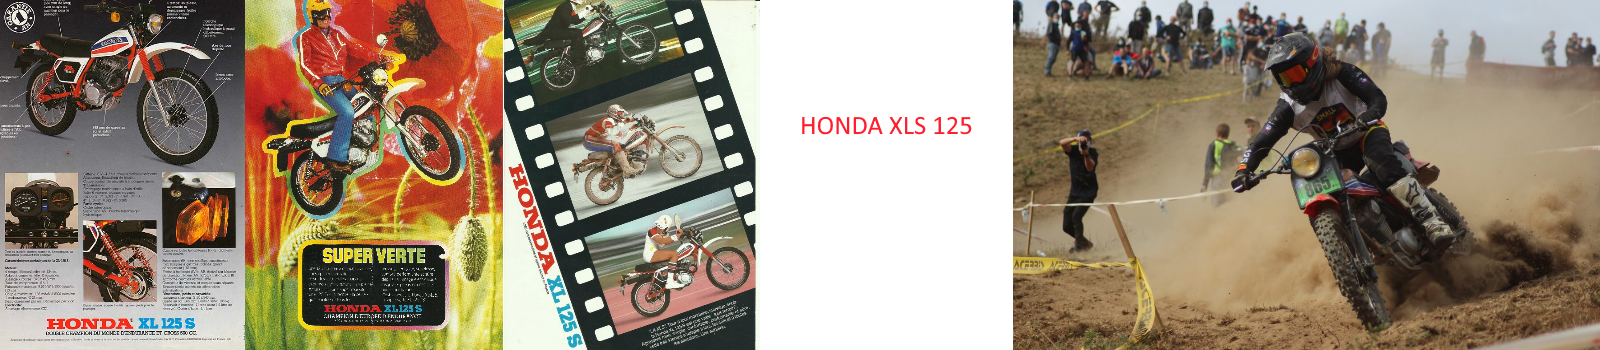 Bandiera HONDA XLS 125